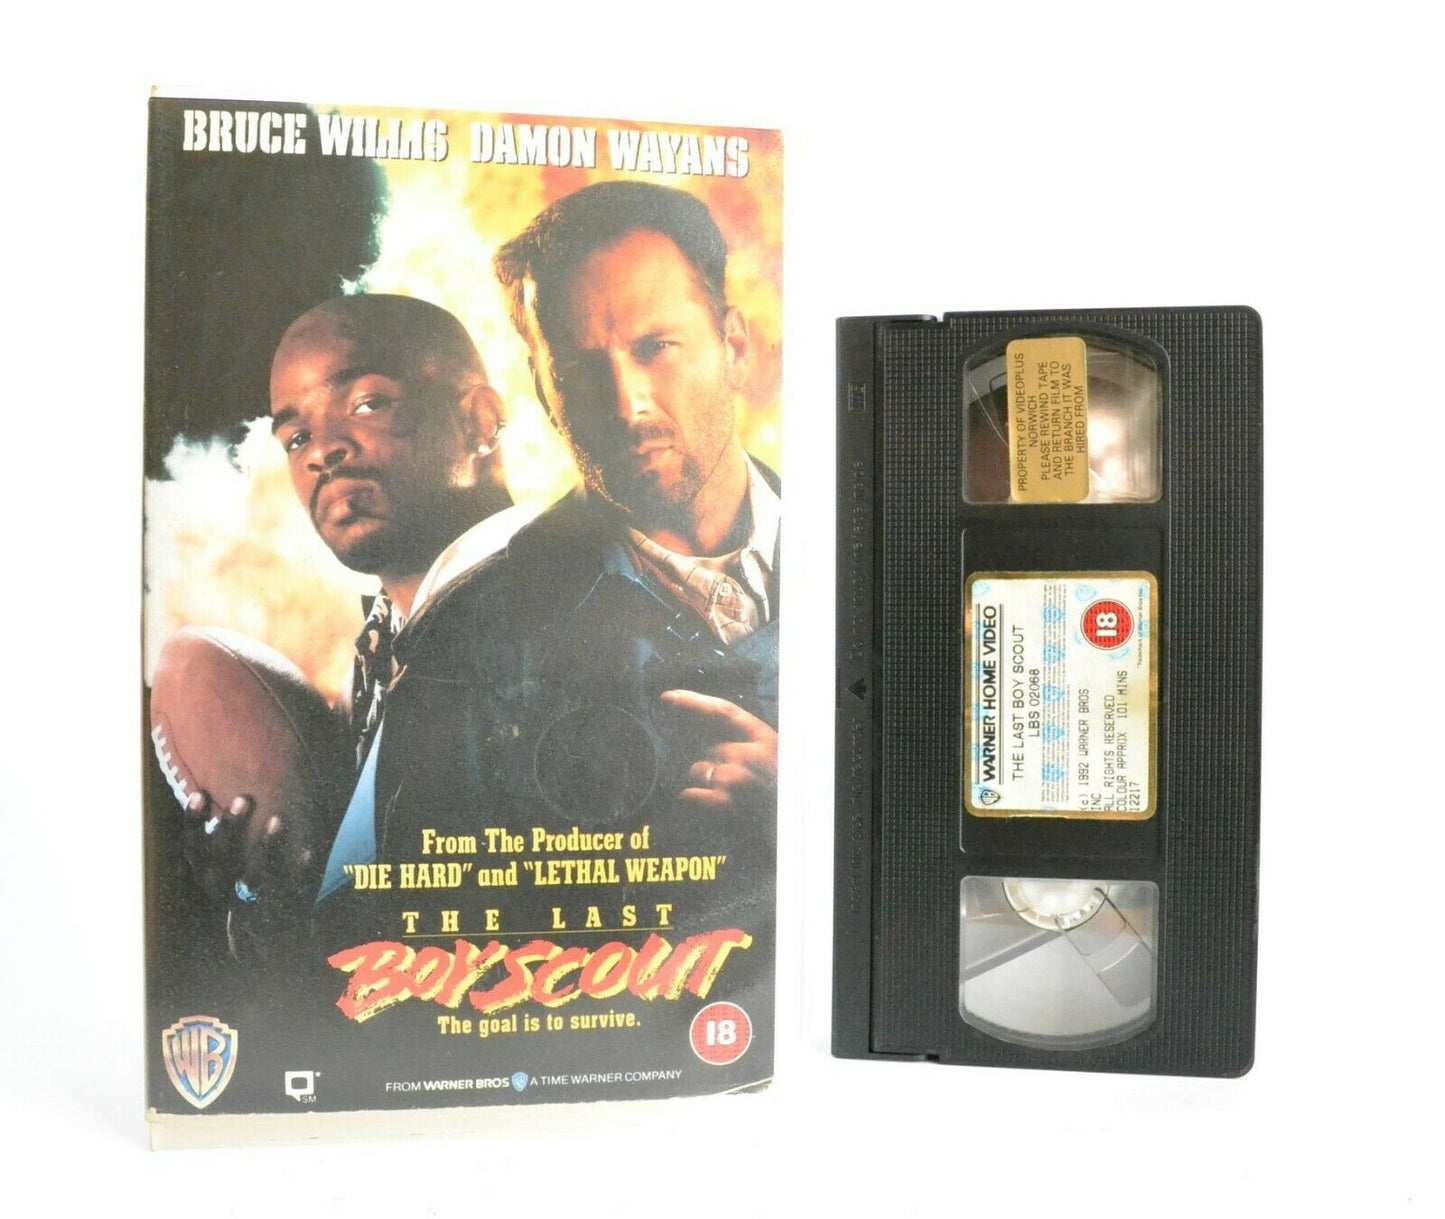 The Last Boy Scout: Bruce Willis - Film By T.Scott - Action - Large Box - VHS-